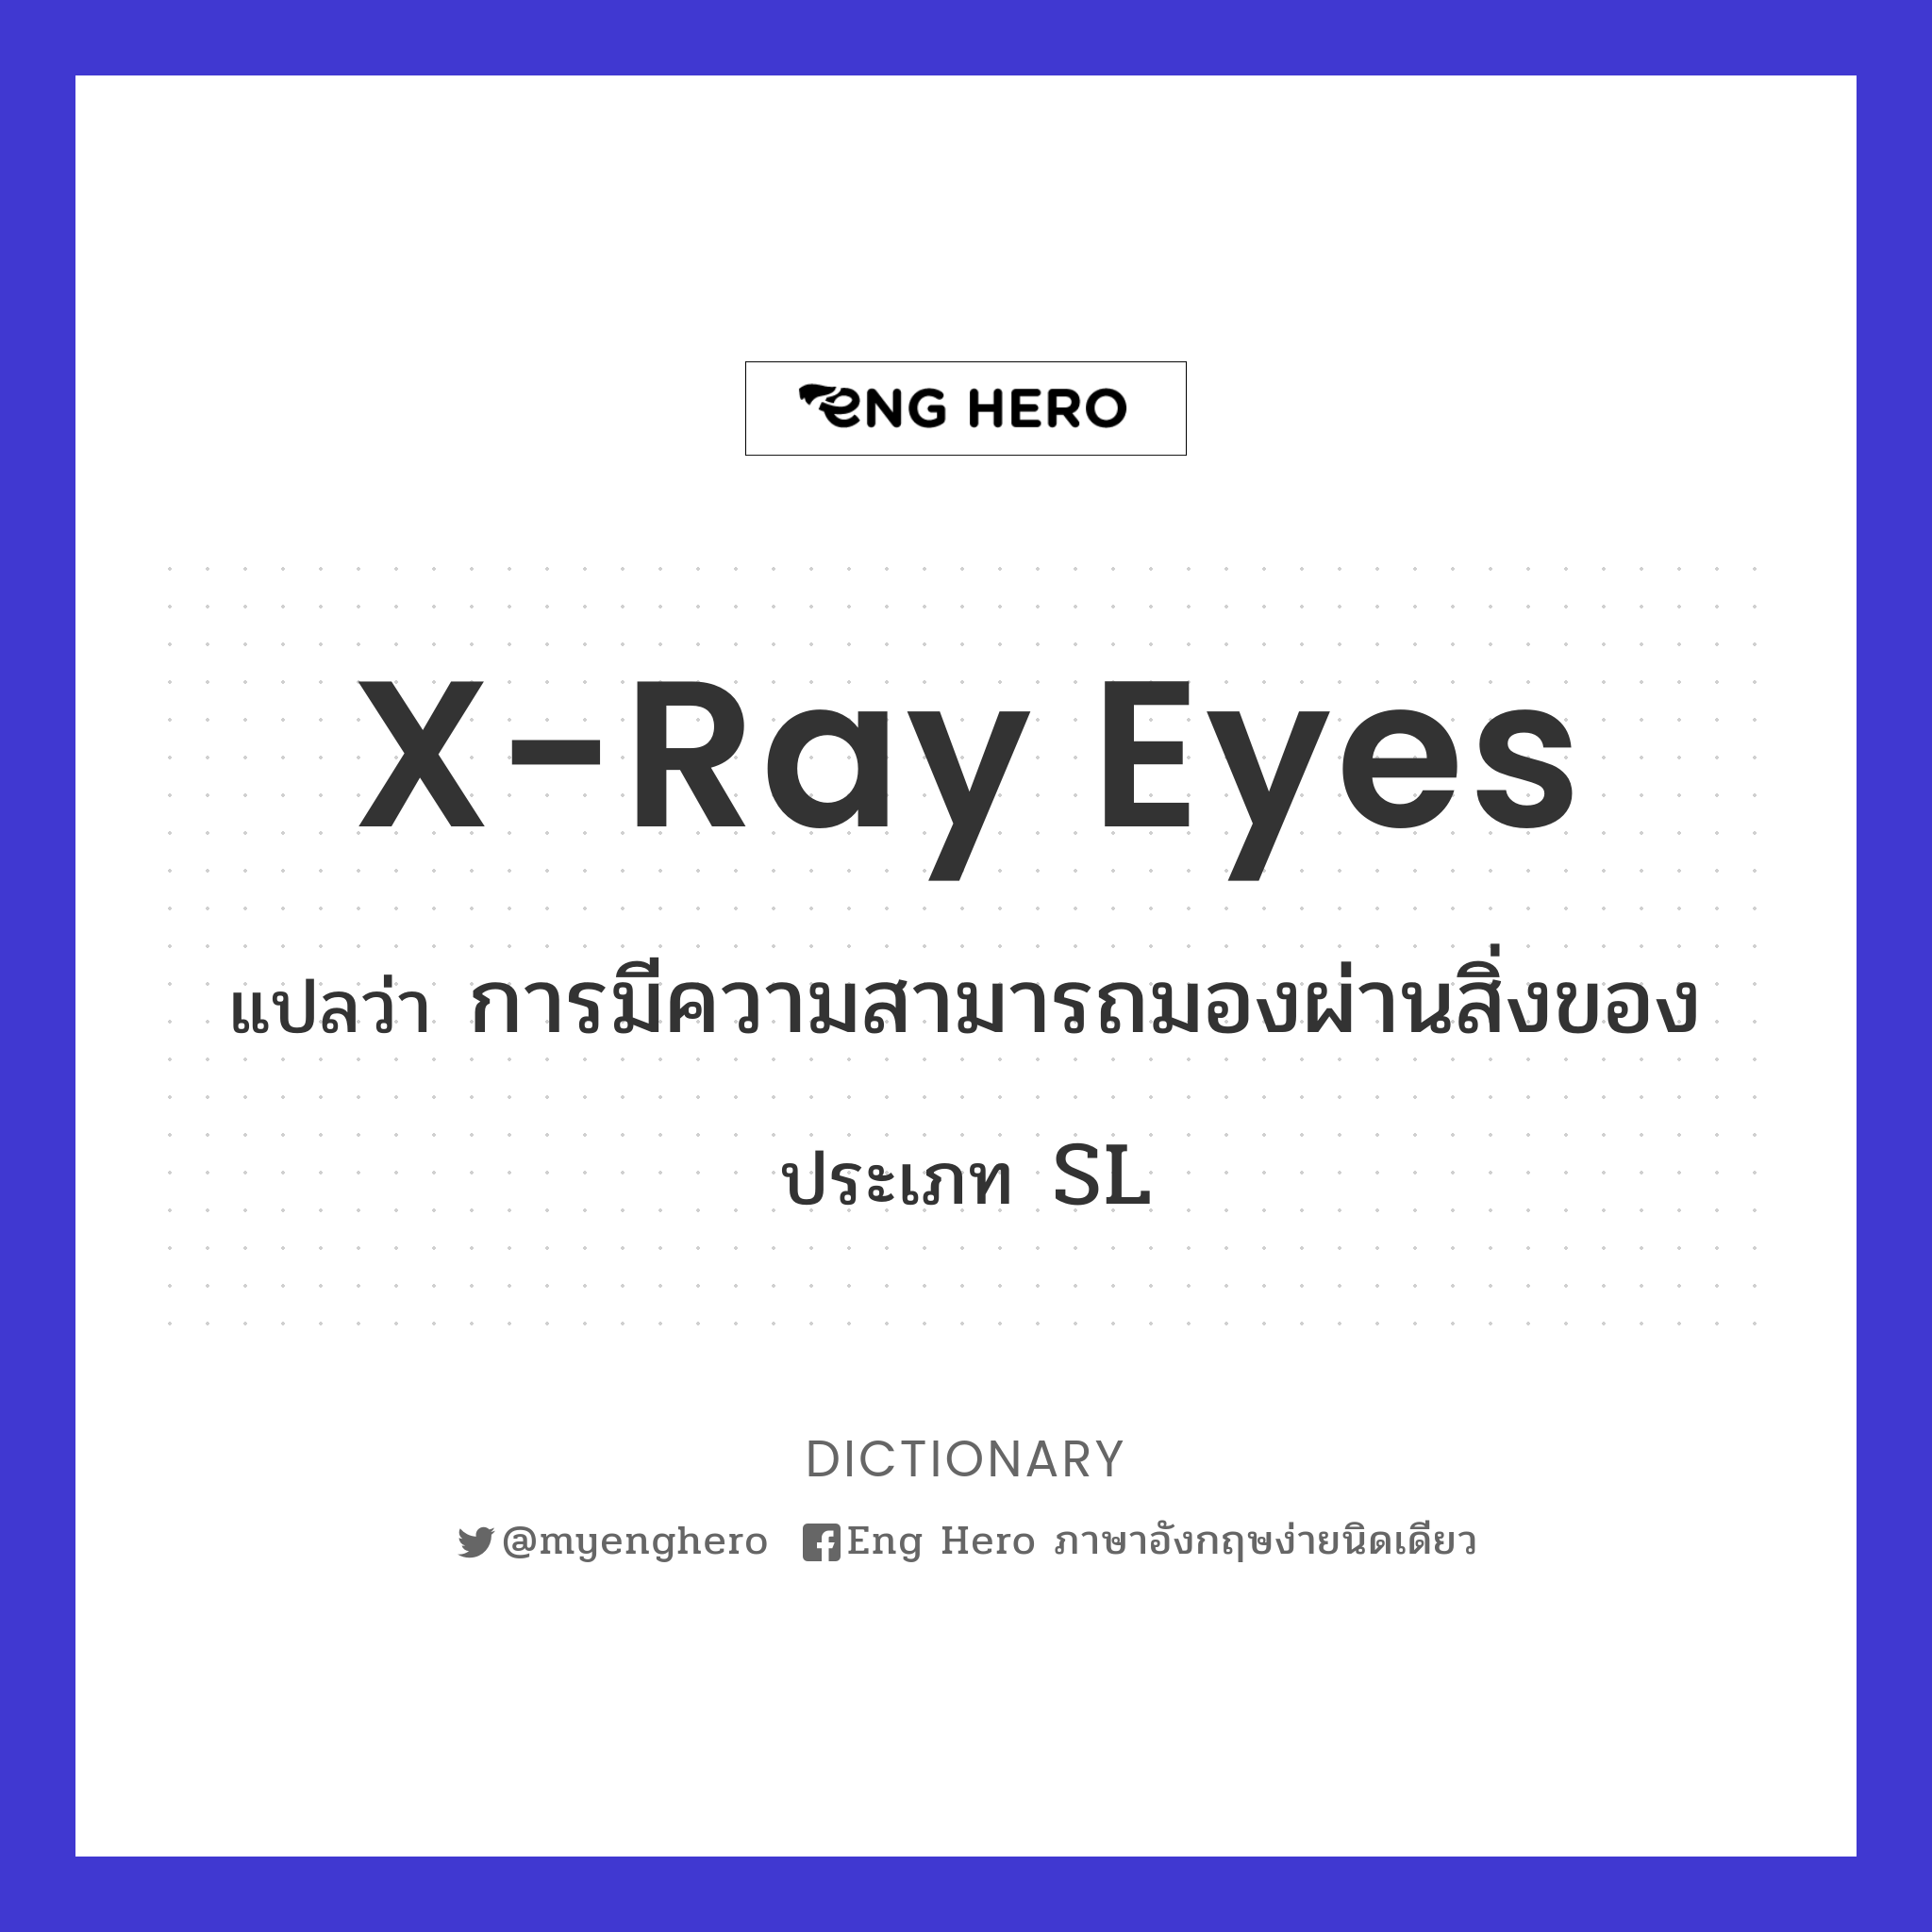 X-ray eyes